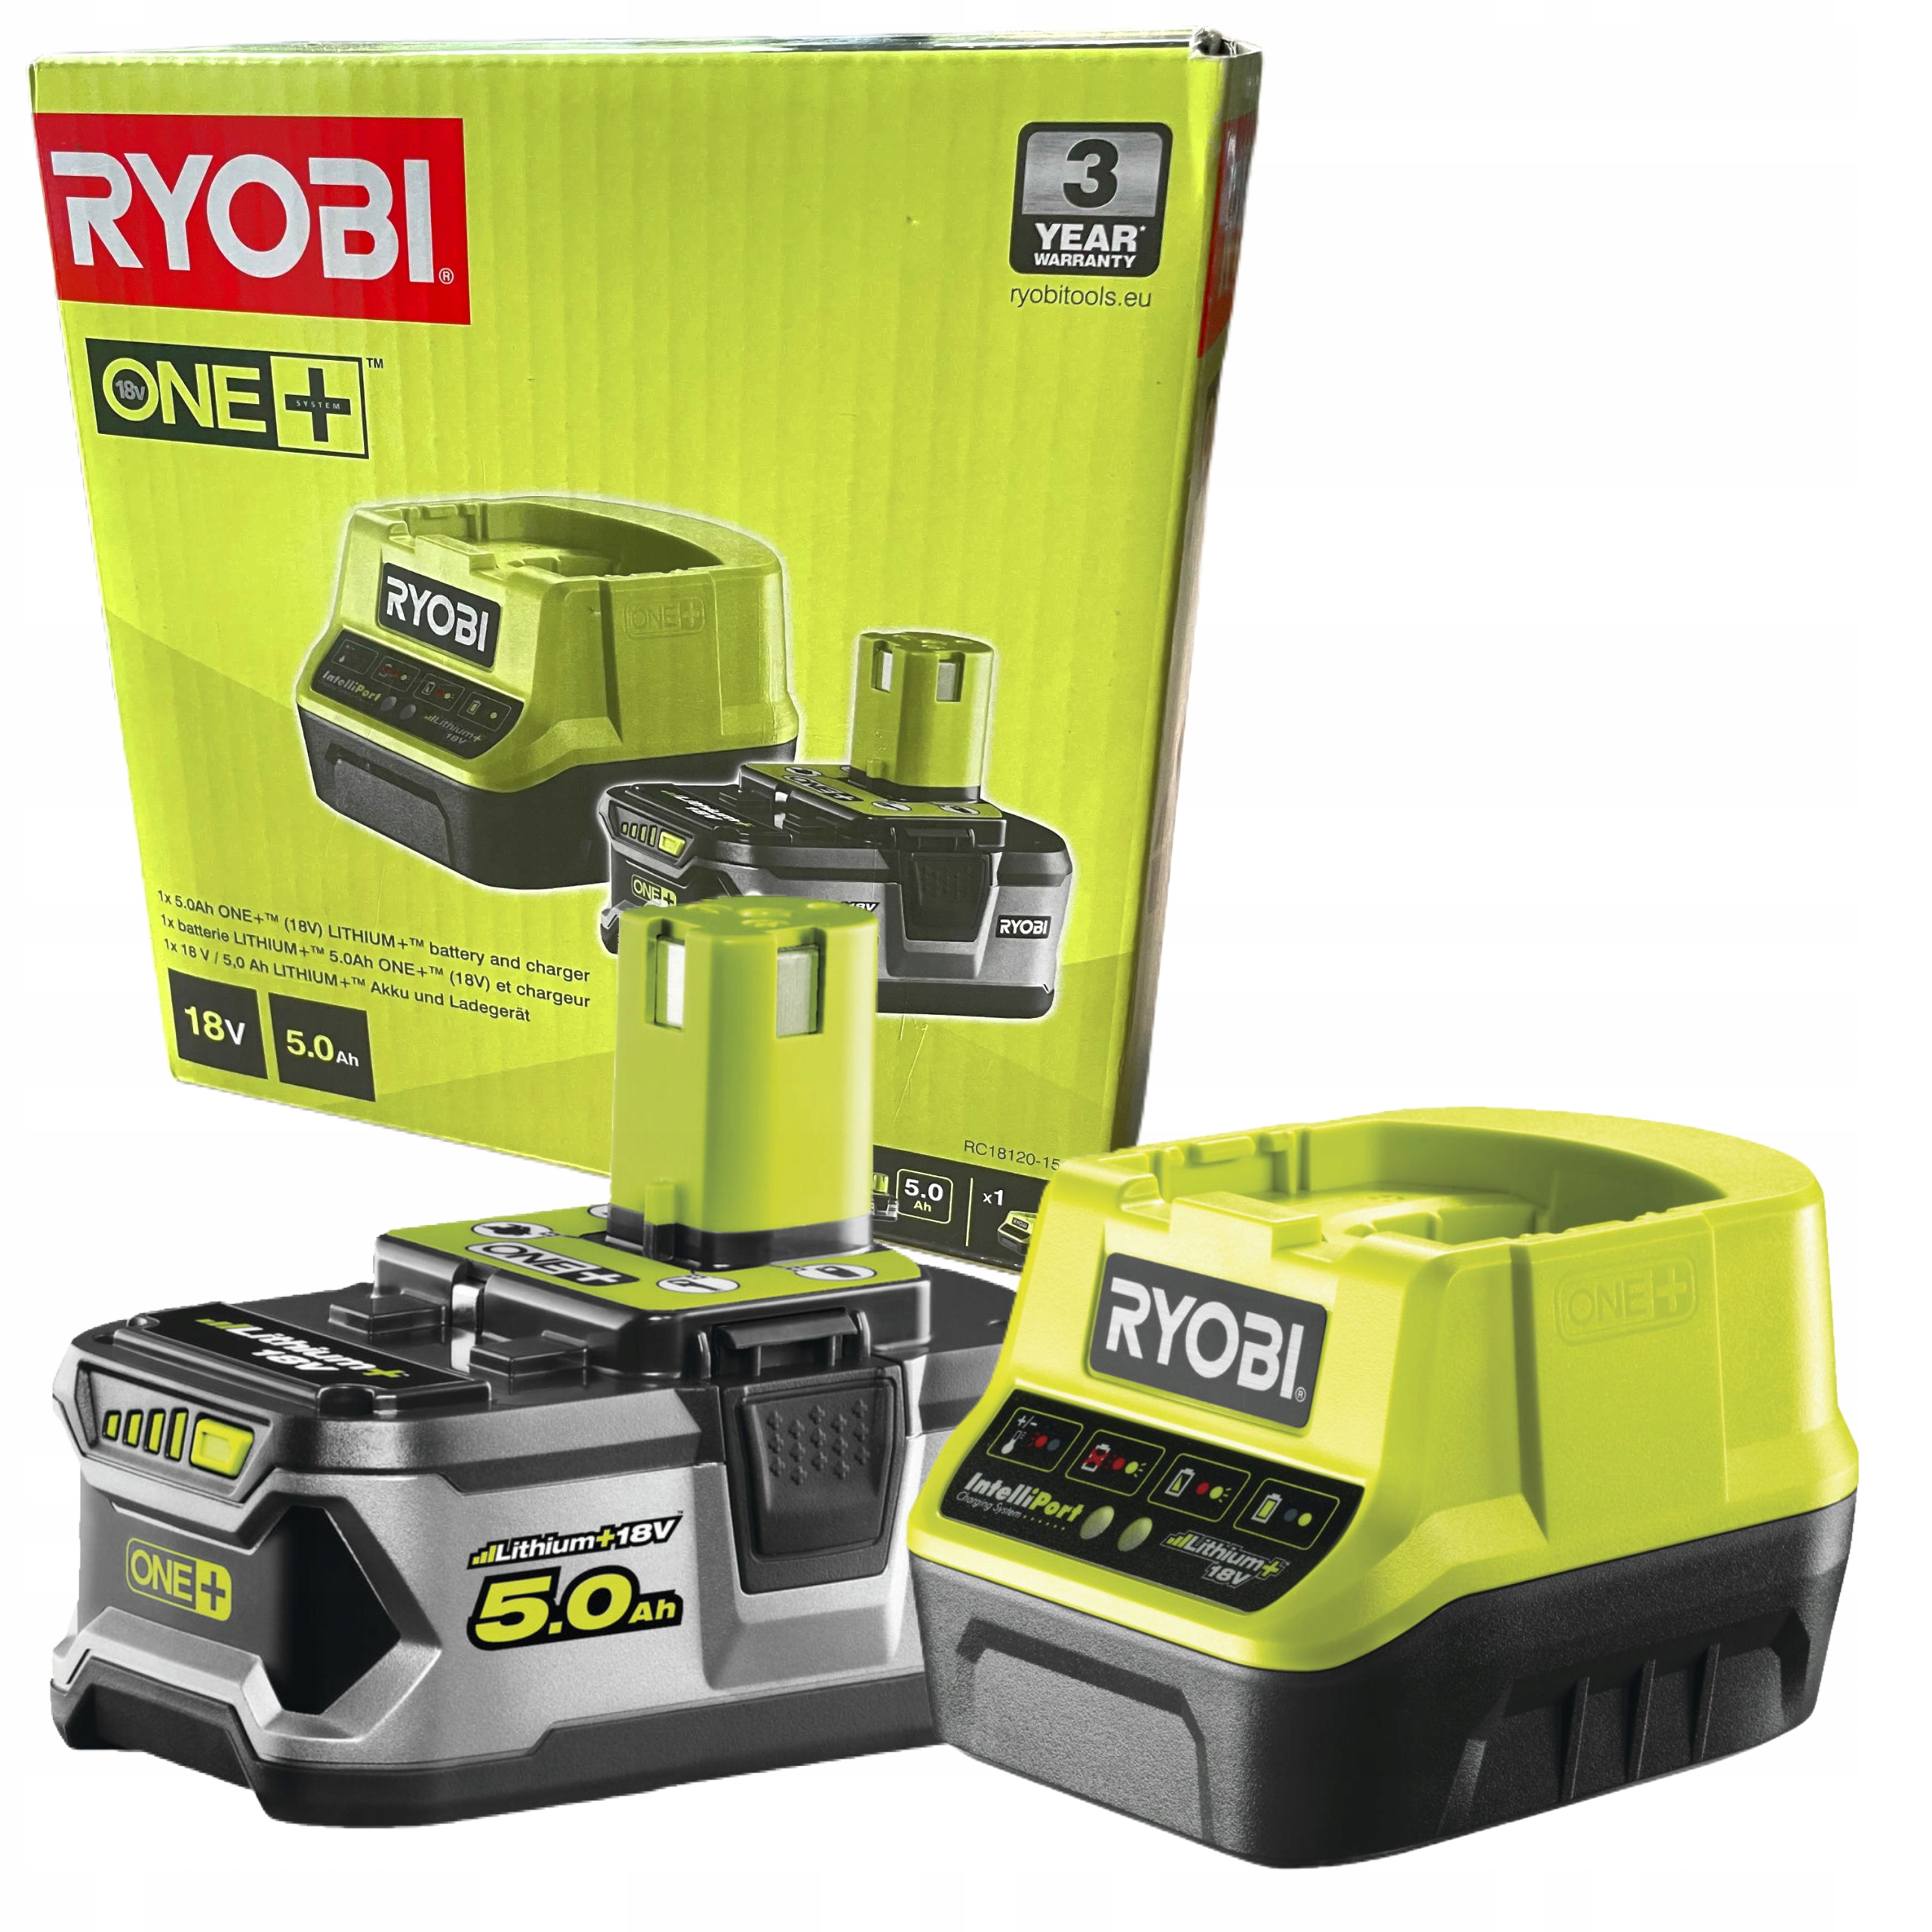 RYOBI RC18120-150 Akumulator + ładowarka 18V (RC18120-150) • Cena, Opinie 8586355850 • Allegro.pl